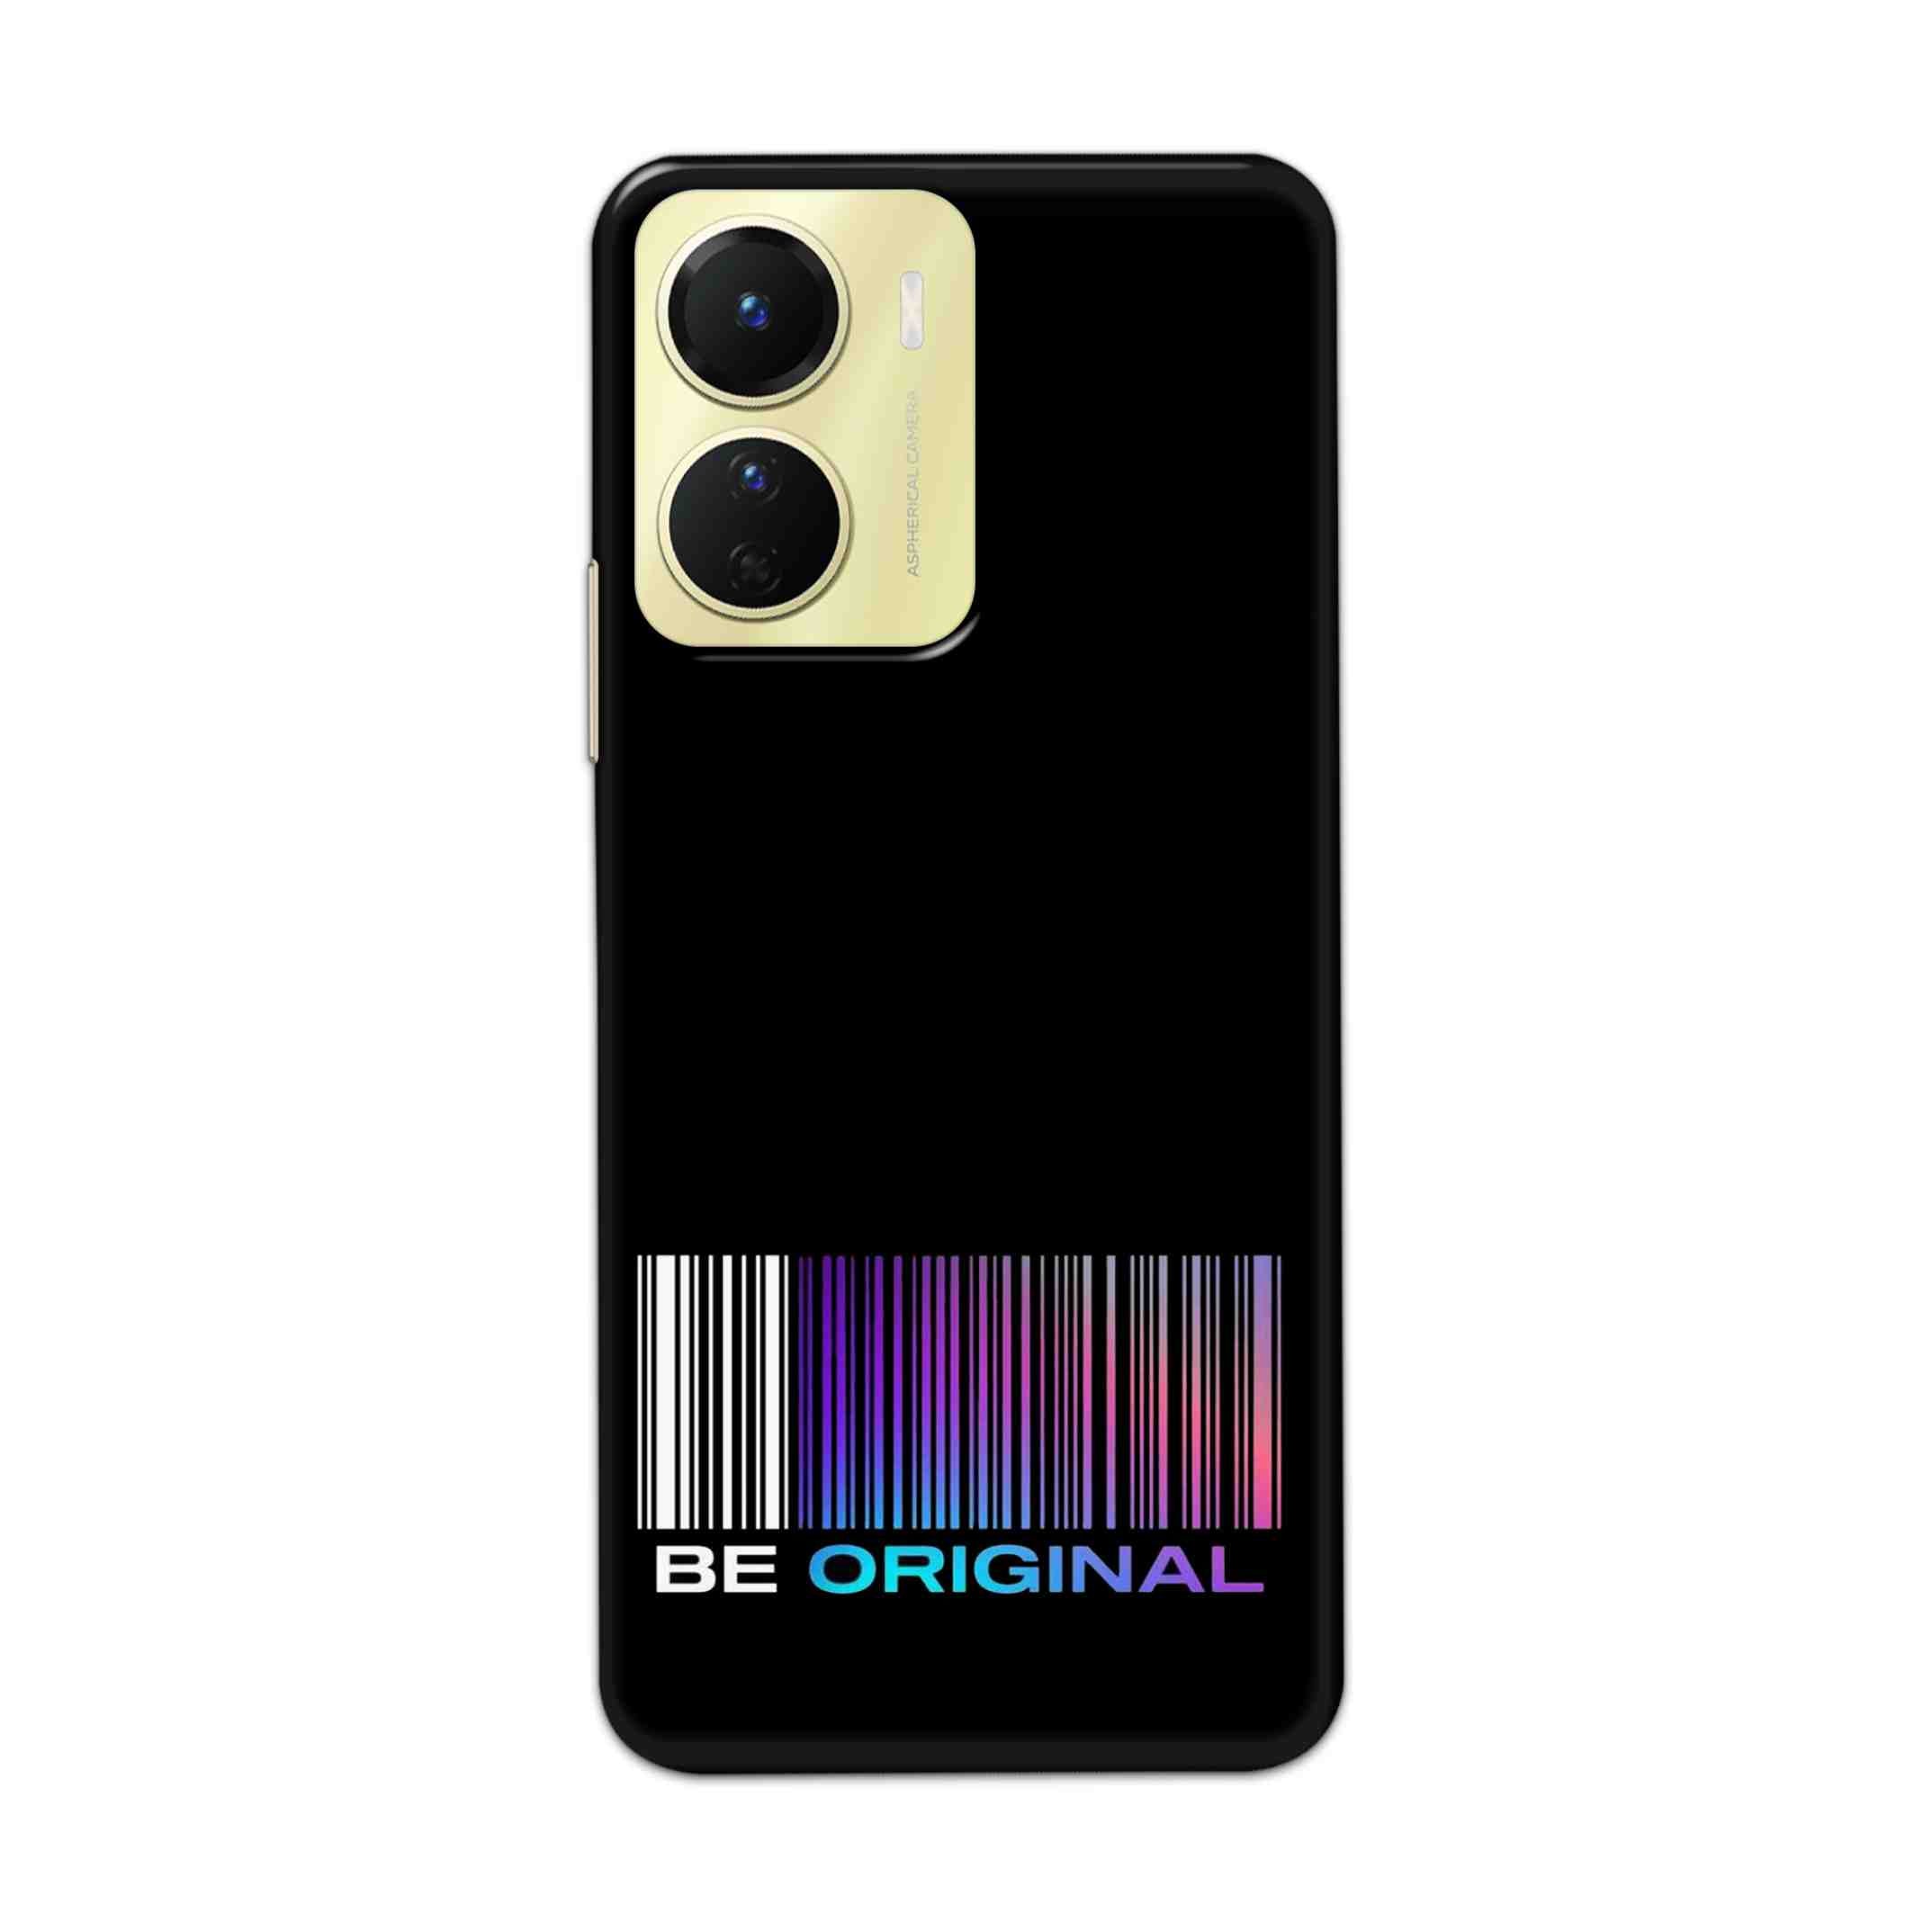 Buy Be Original Hard Back Mobile Phone Case Cover For Vivo Y16 Online